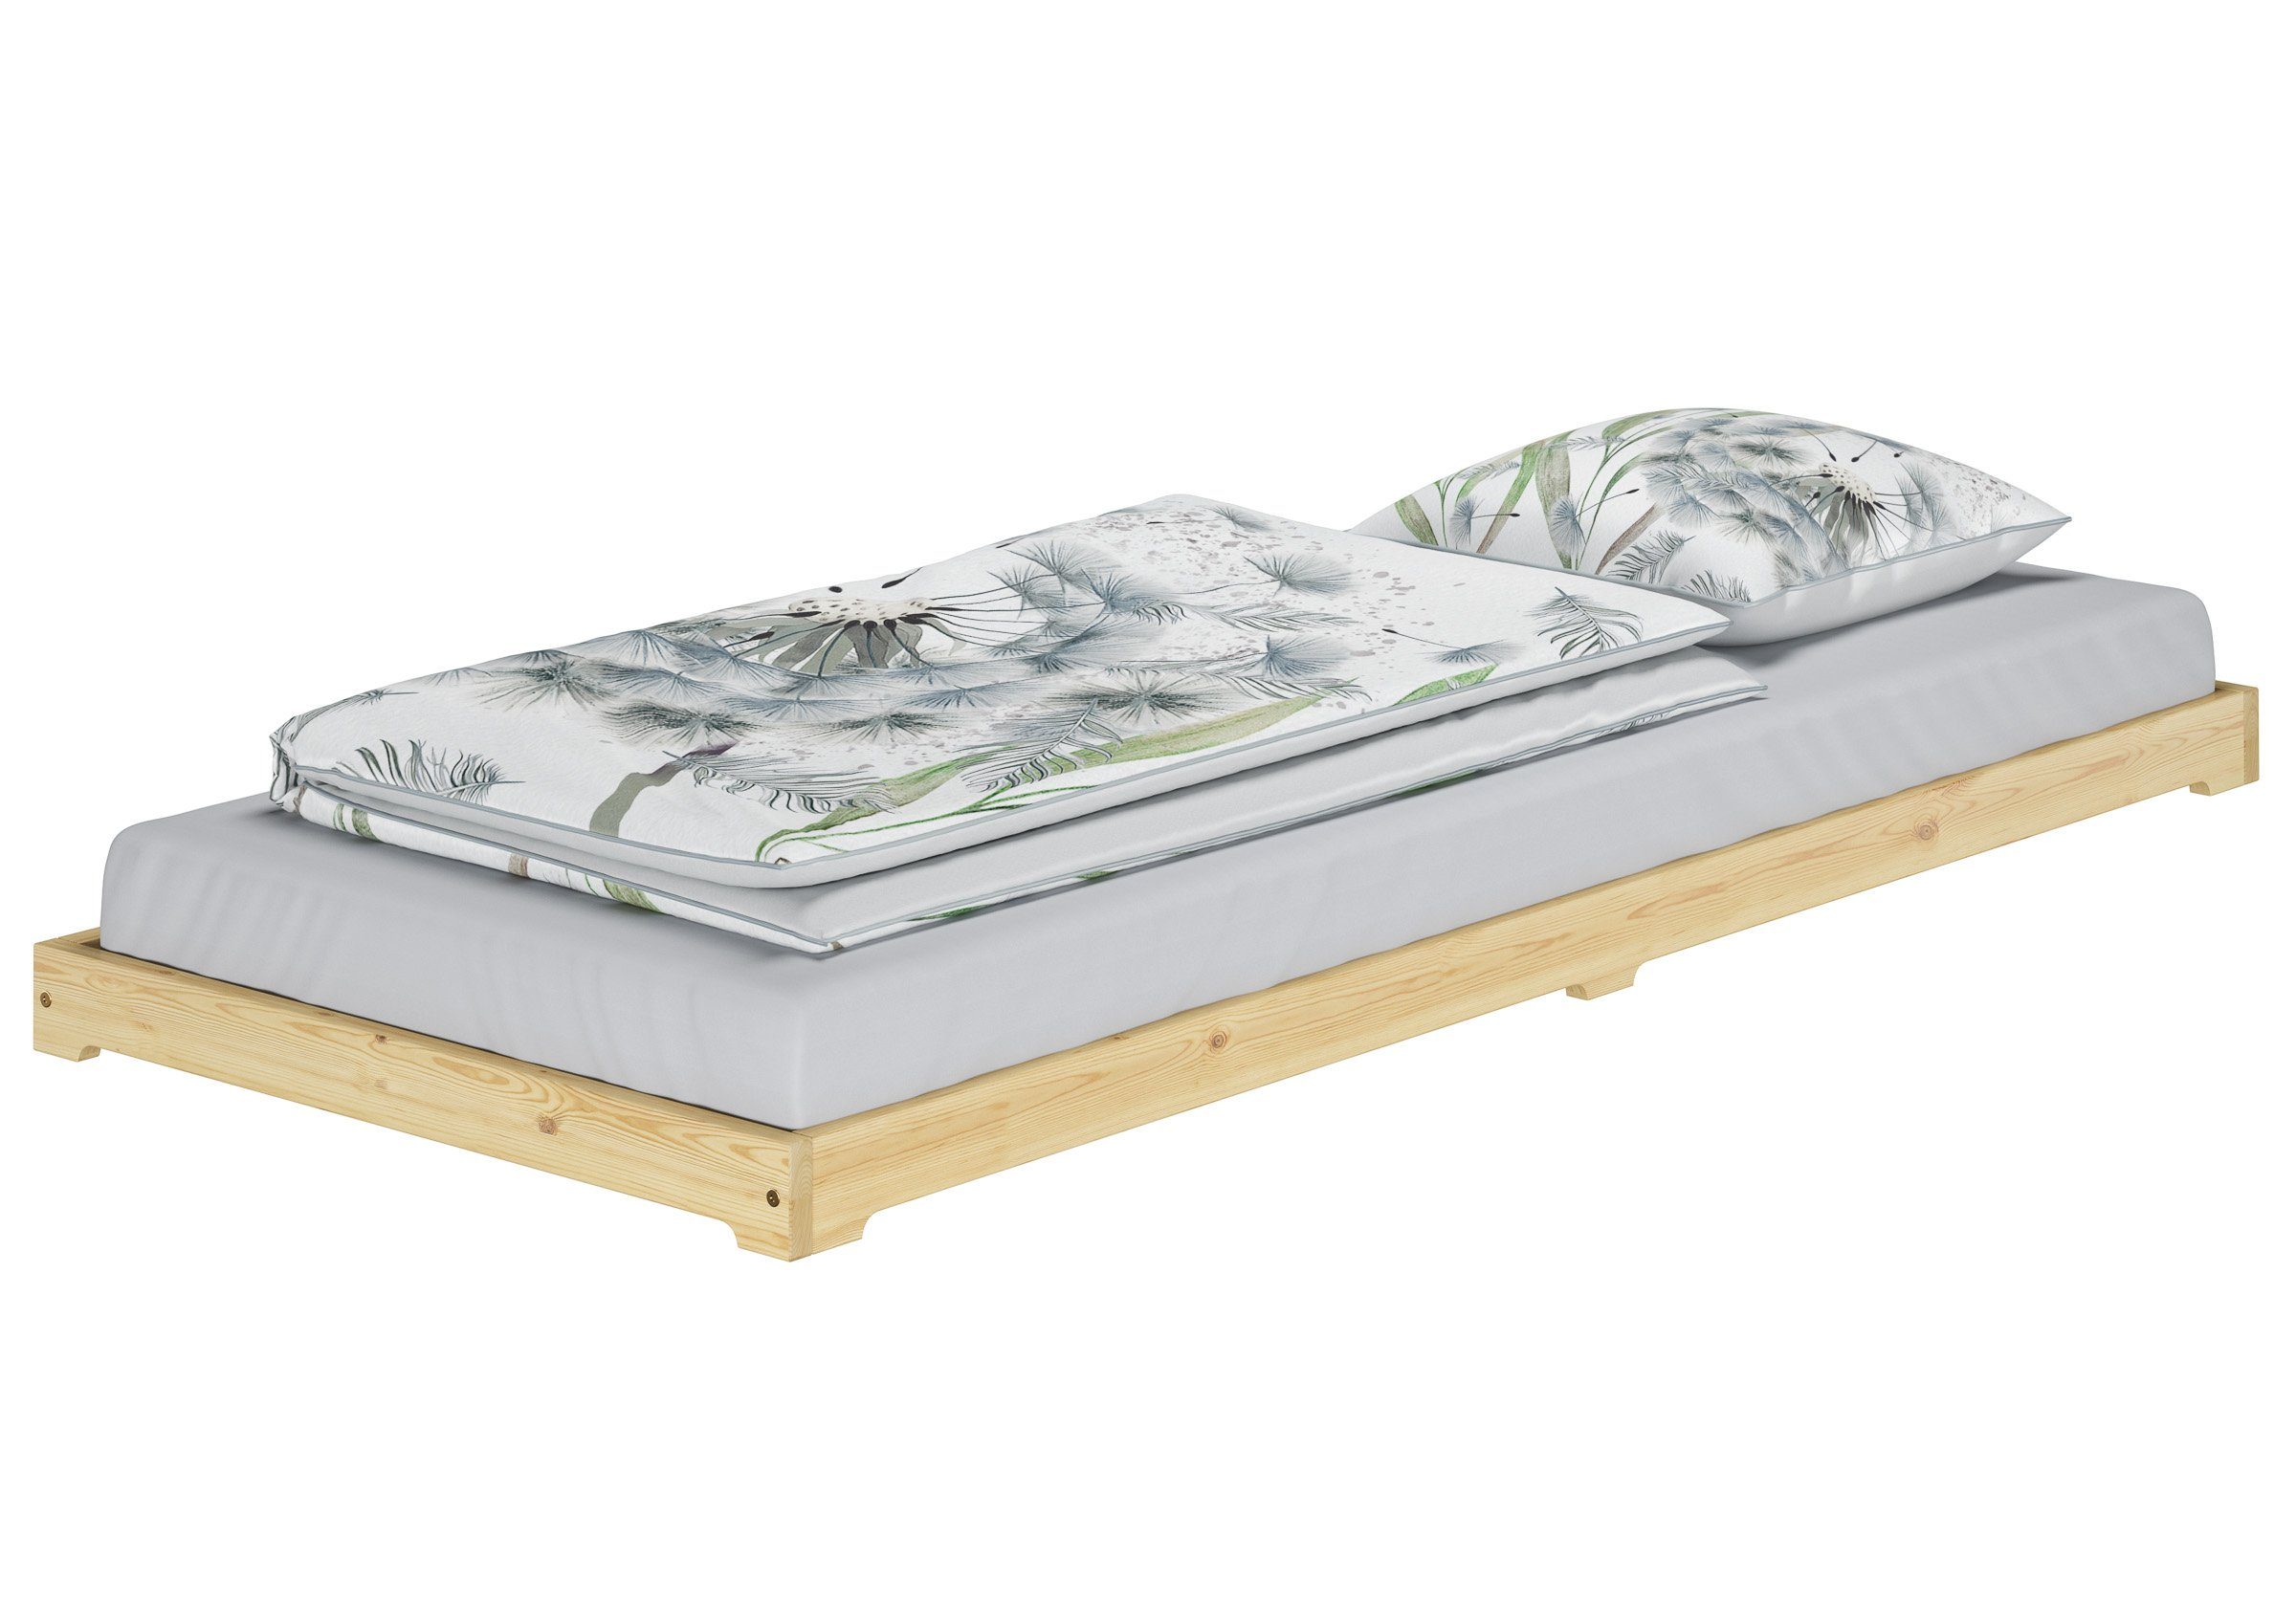 ERST-HOLZ Bett Kleines Futonbett extra niedriges Holzbett 80x180 cm Kiefer lackiert, Kieferfarblos lackiert